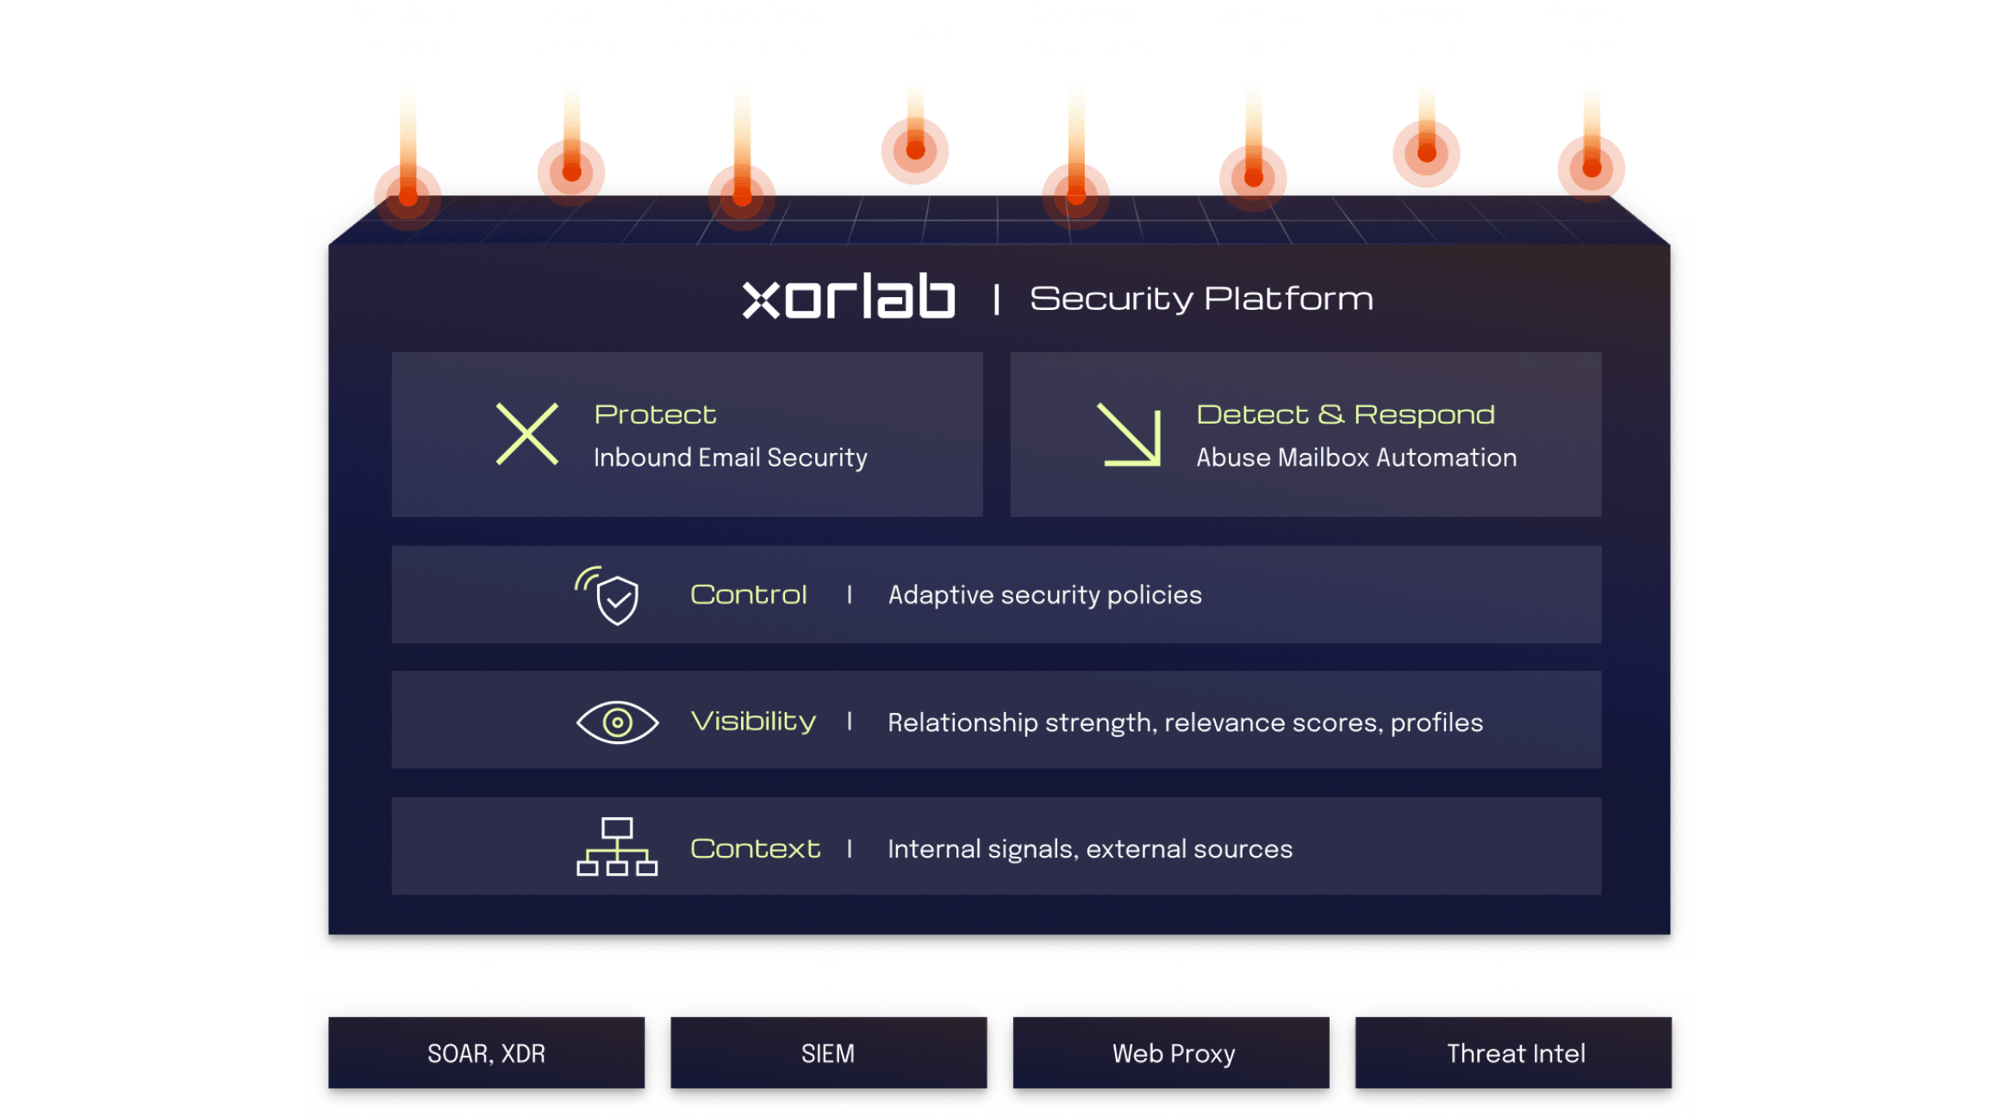 xorlab Security Platform